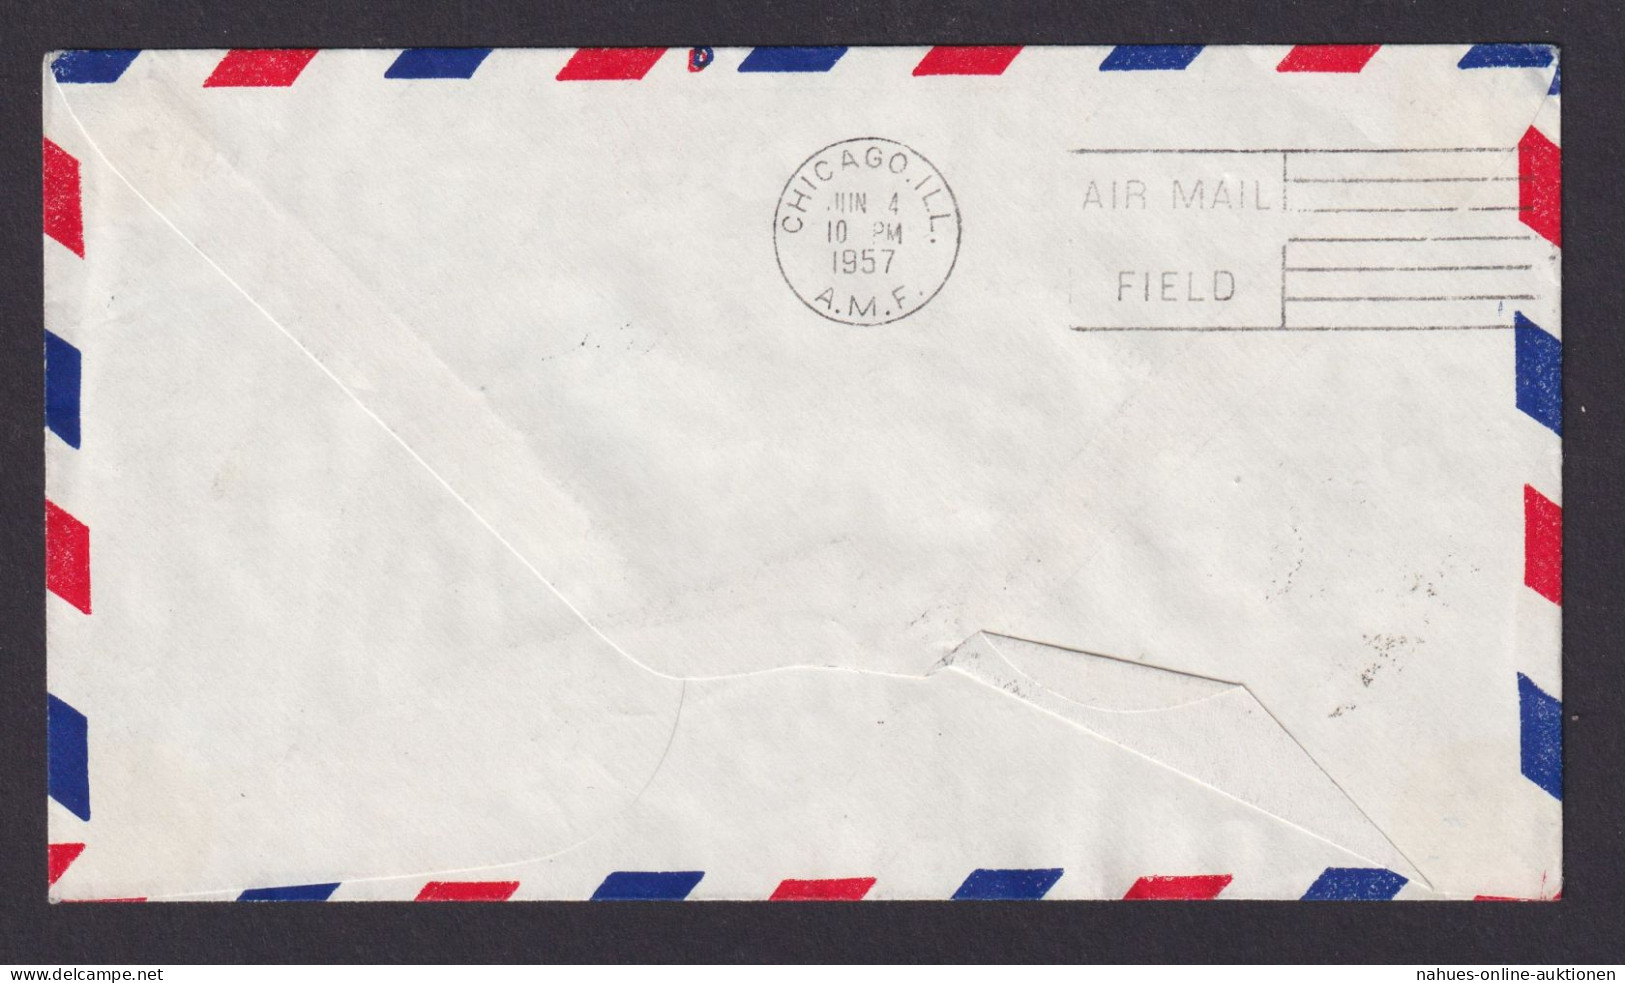 Flugpost Brief Air Mail Pan America Erstflug Rom Italien Chicago USA N. New York - Oblitérés